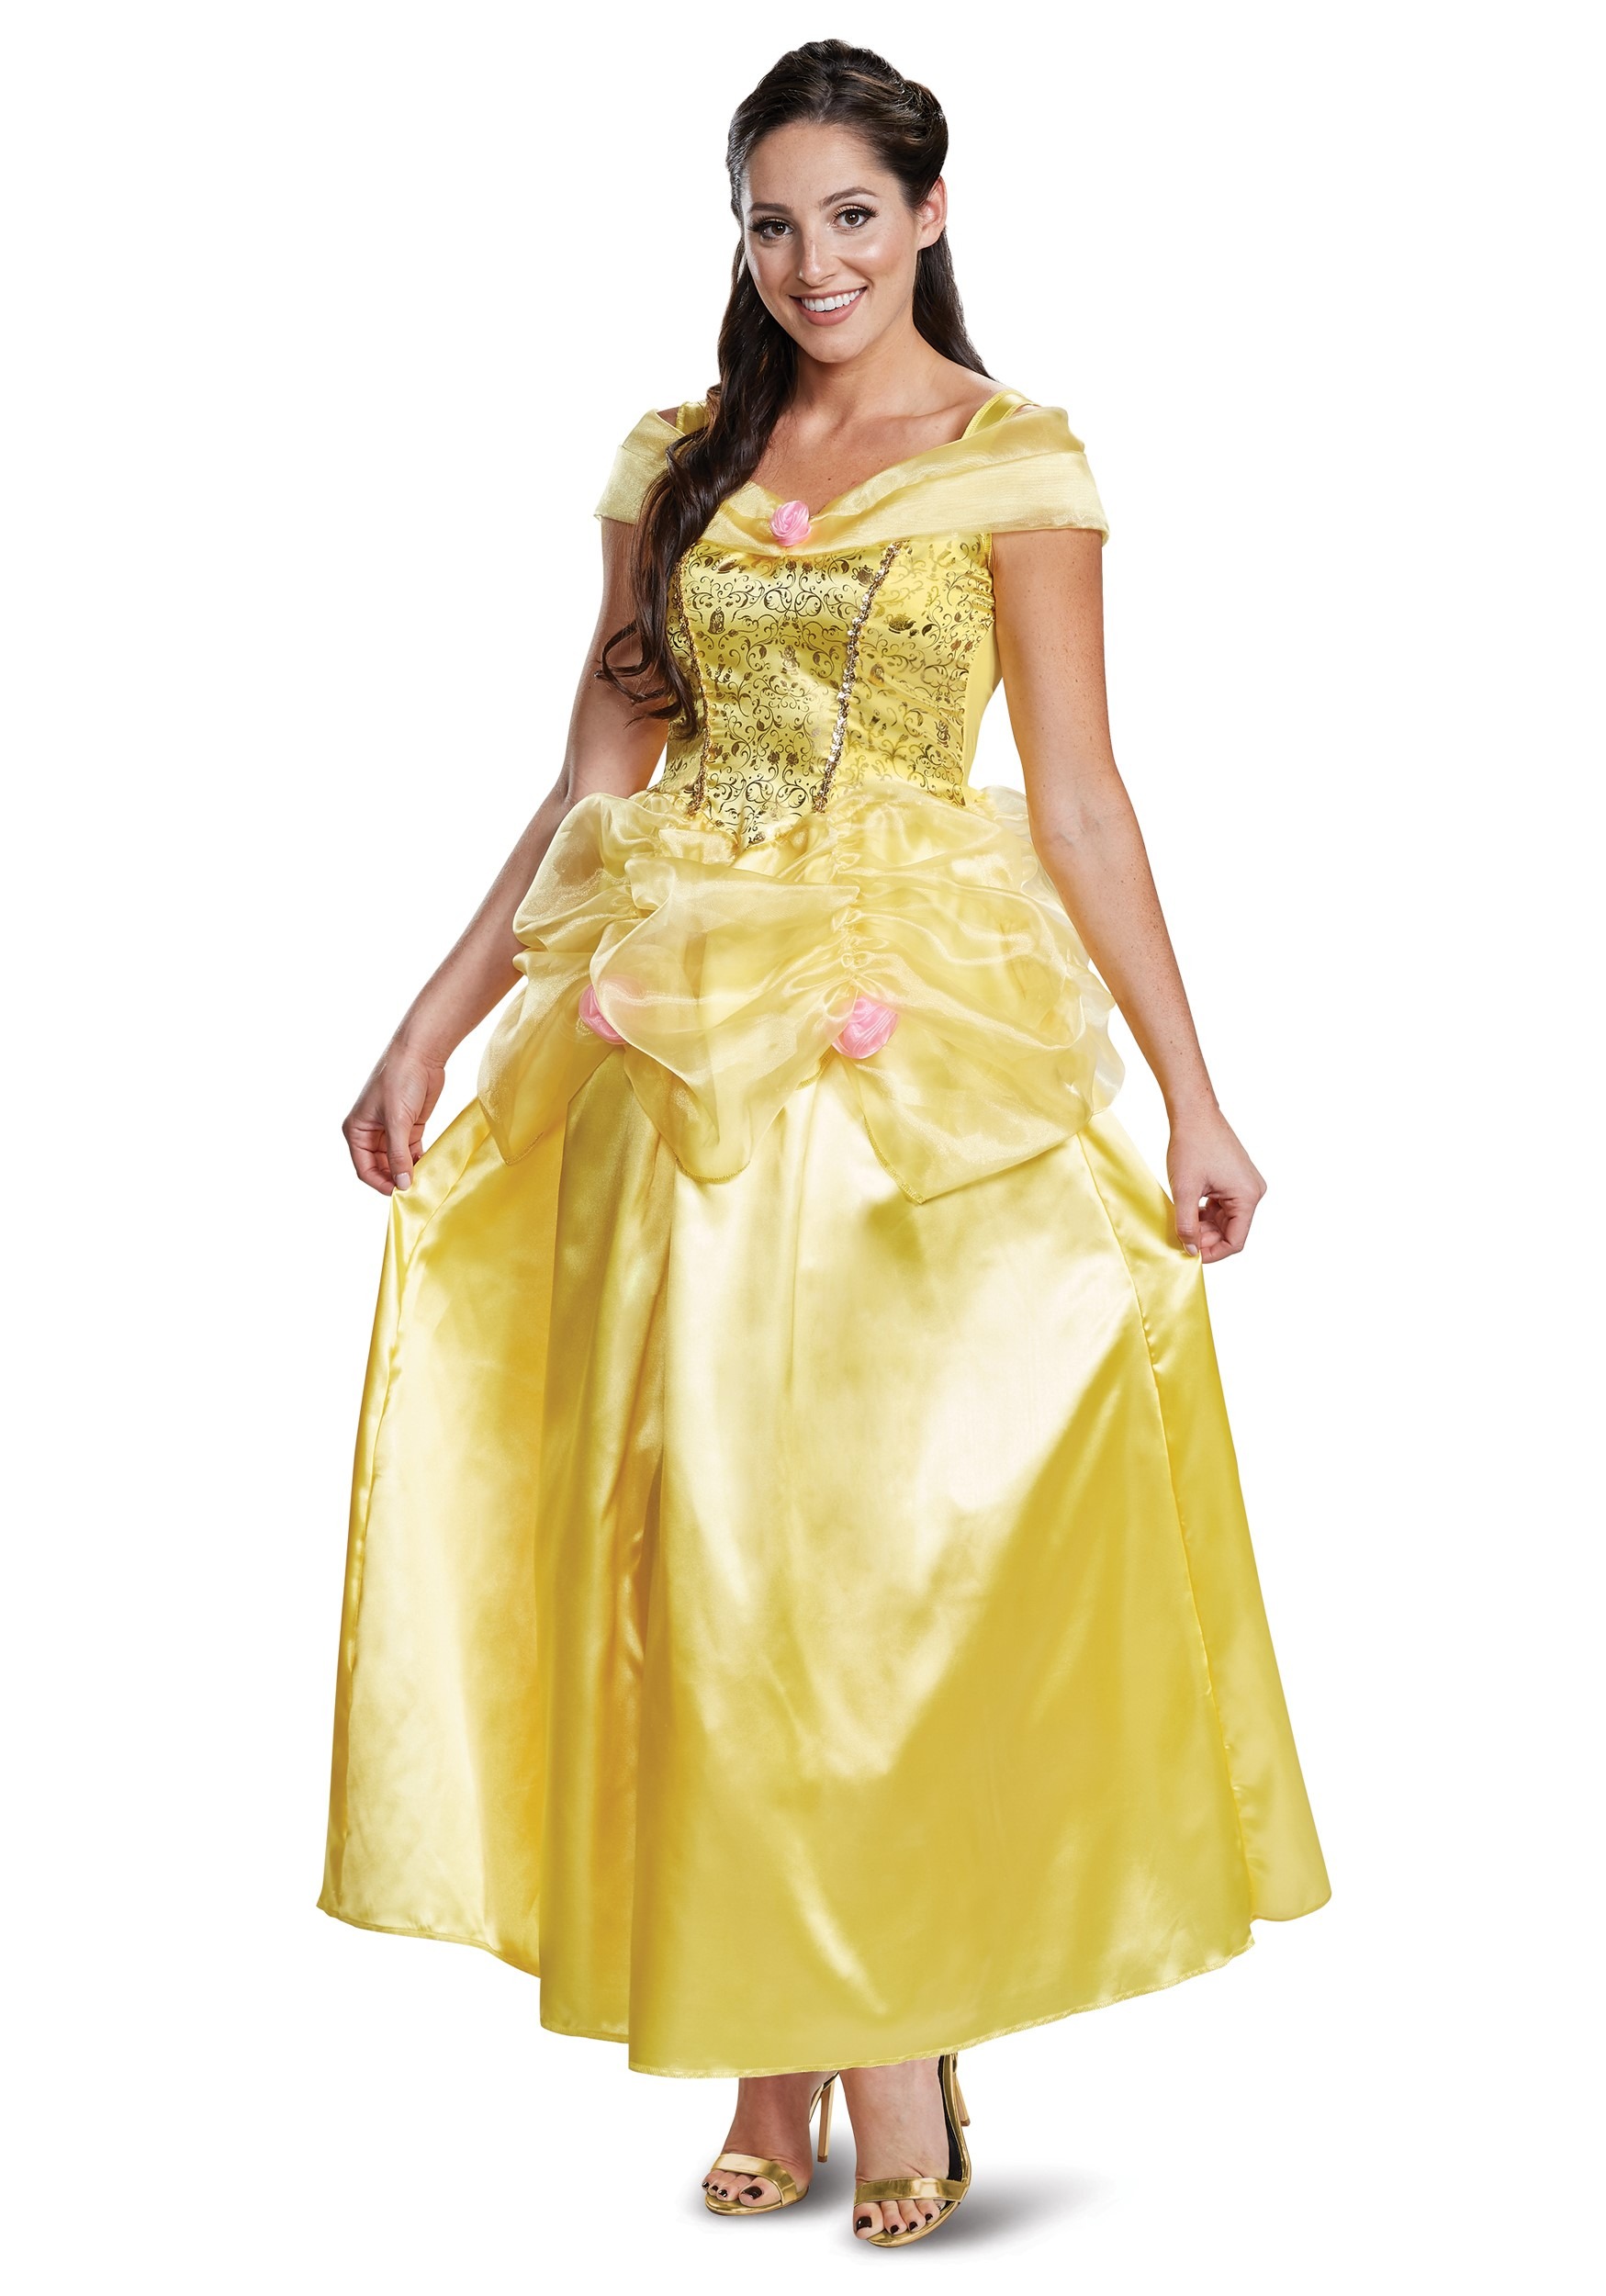 Disney Belle Dress | The Beast Deluxe Classic Belle Costume